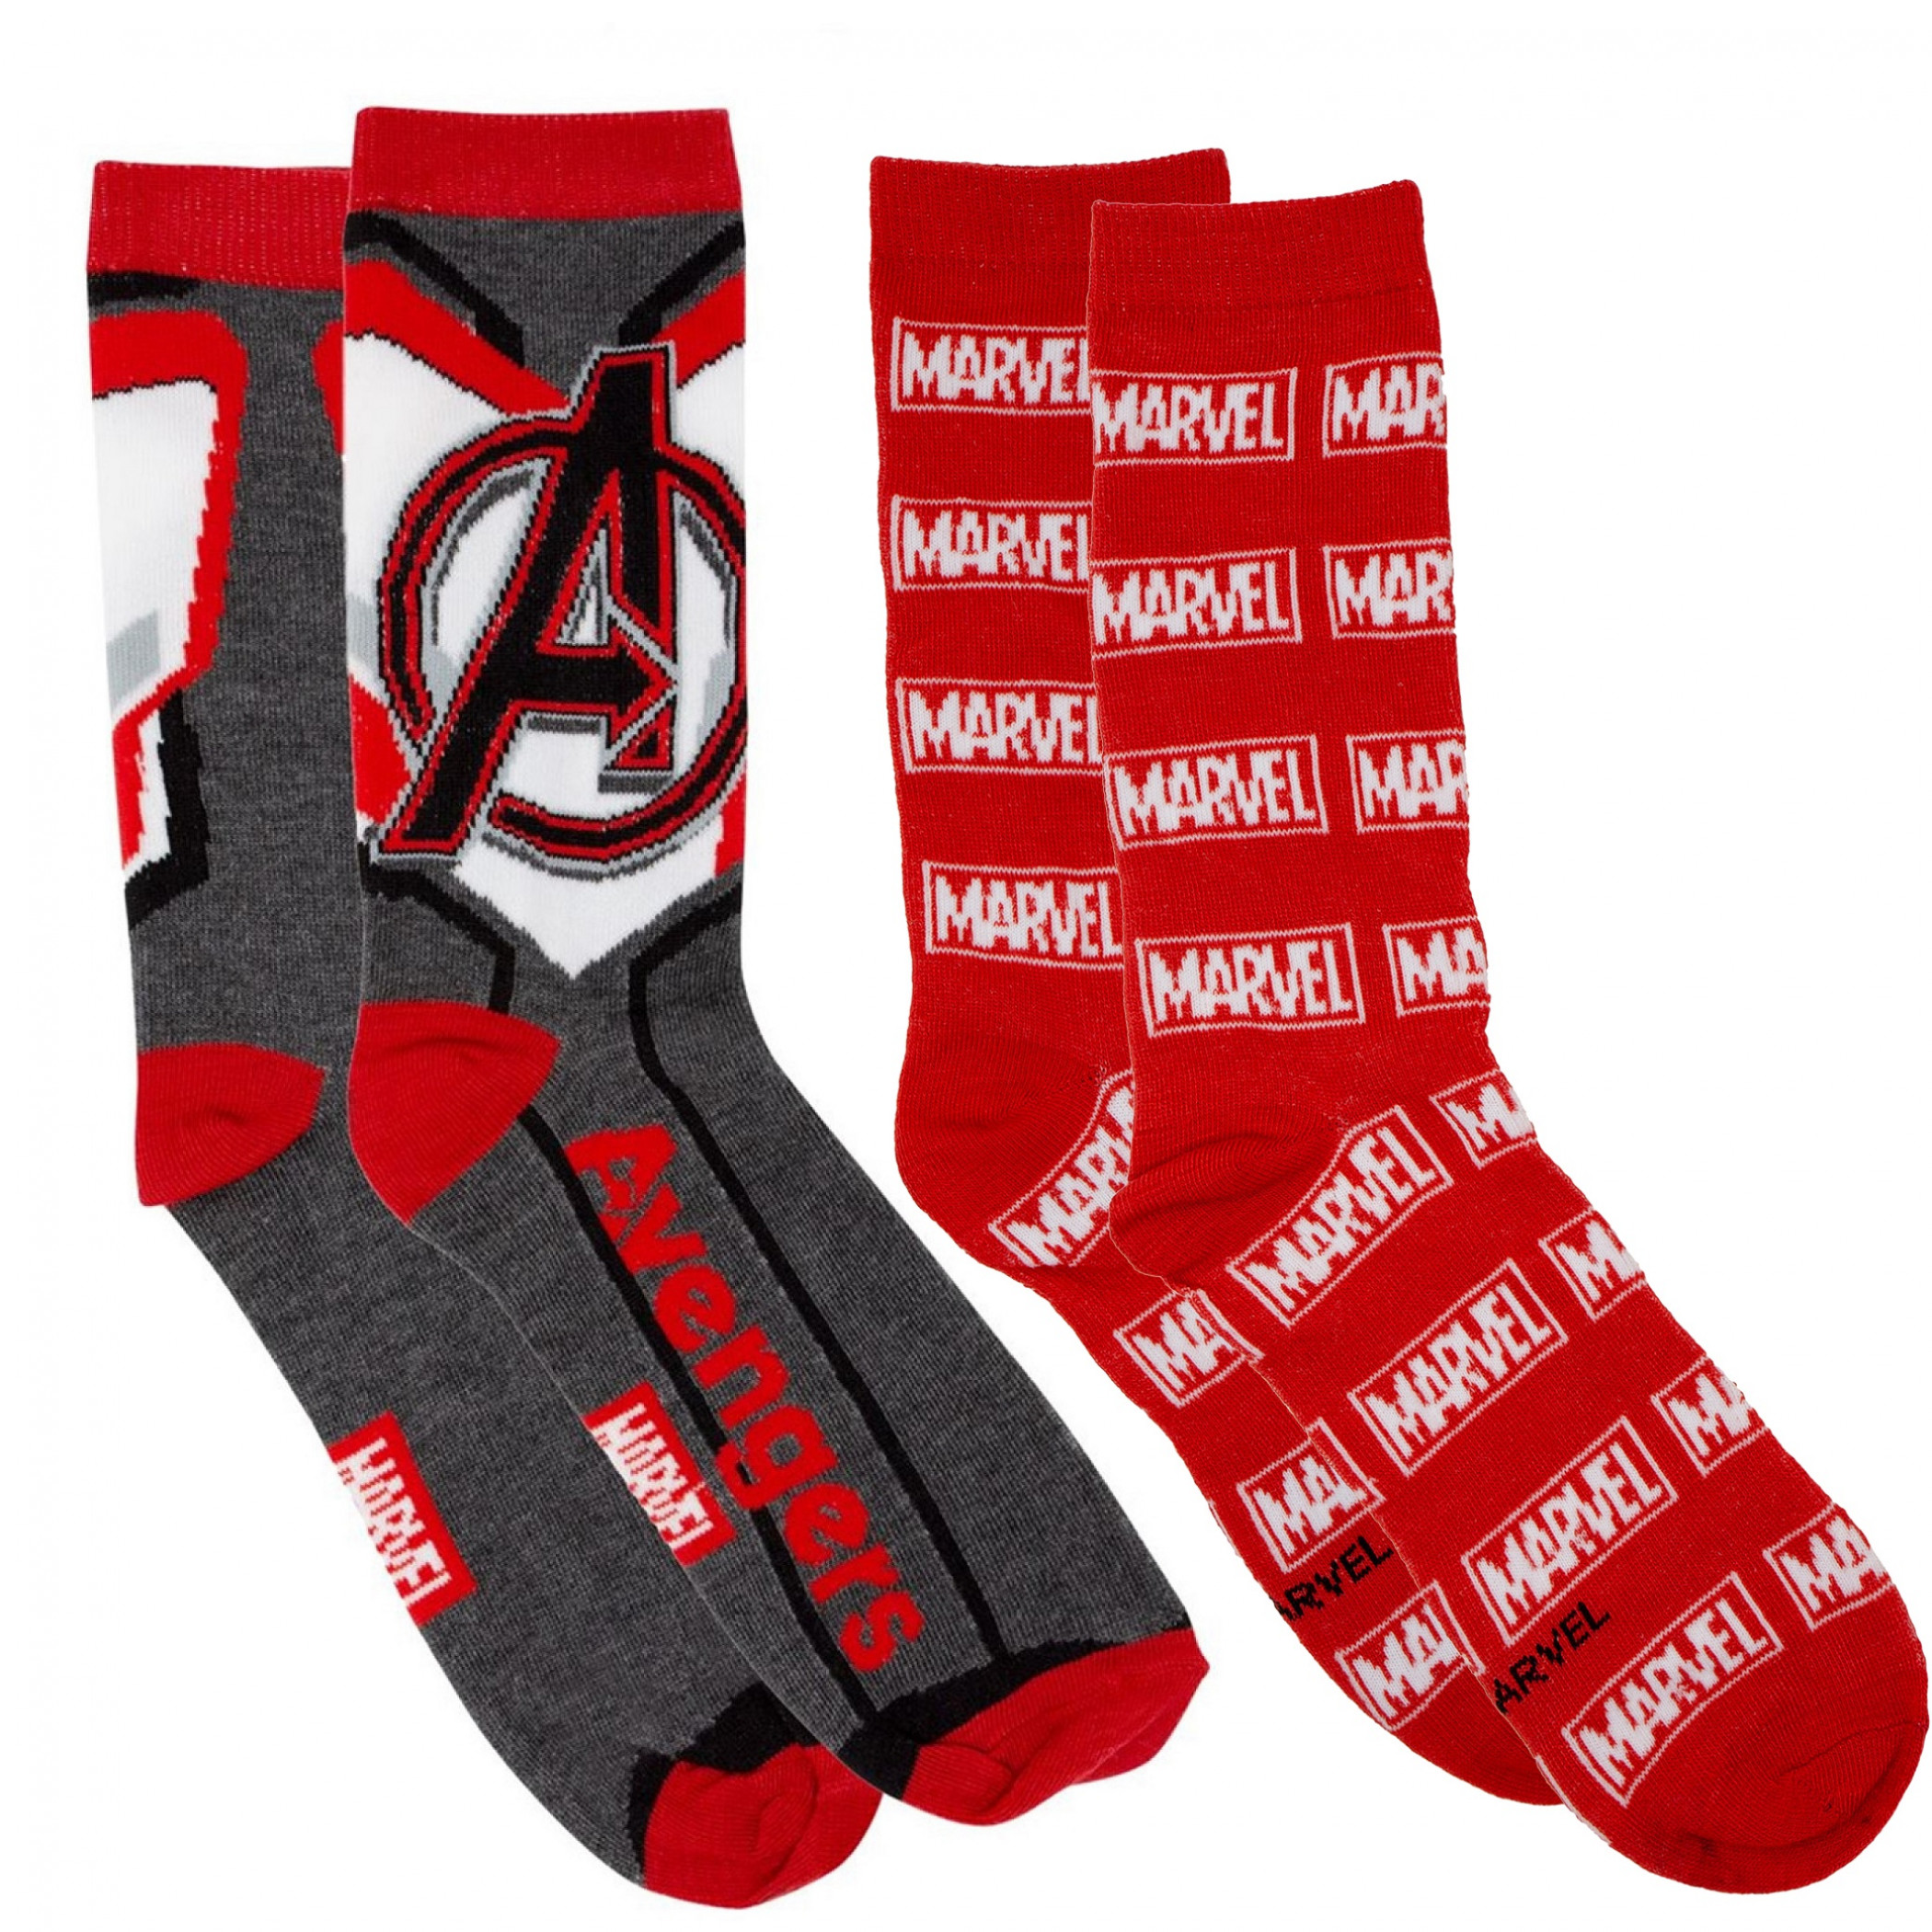 Marvel Brand Text and Avengers Costume Crew Socks 2-Pair Pack